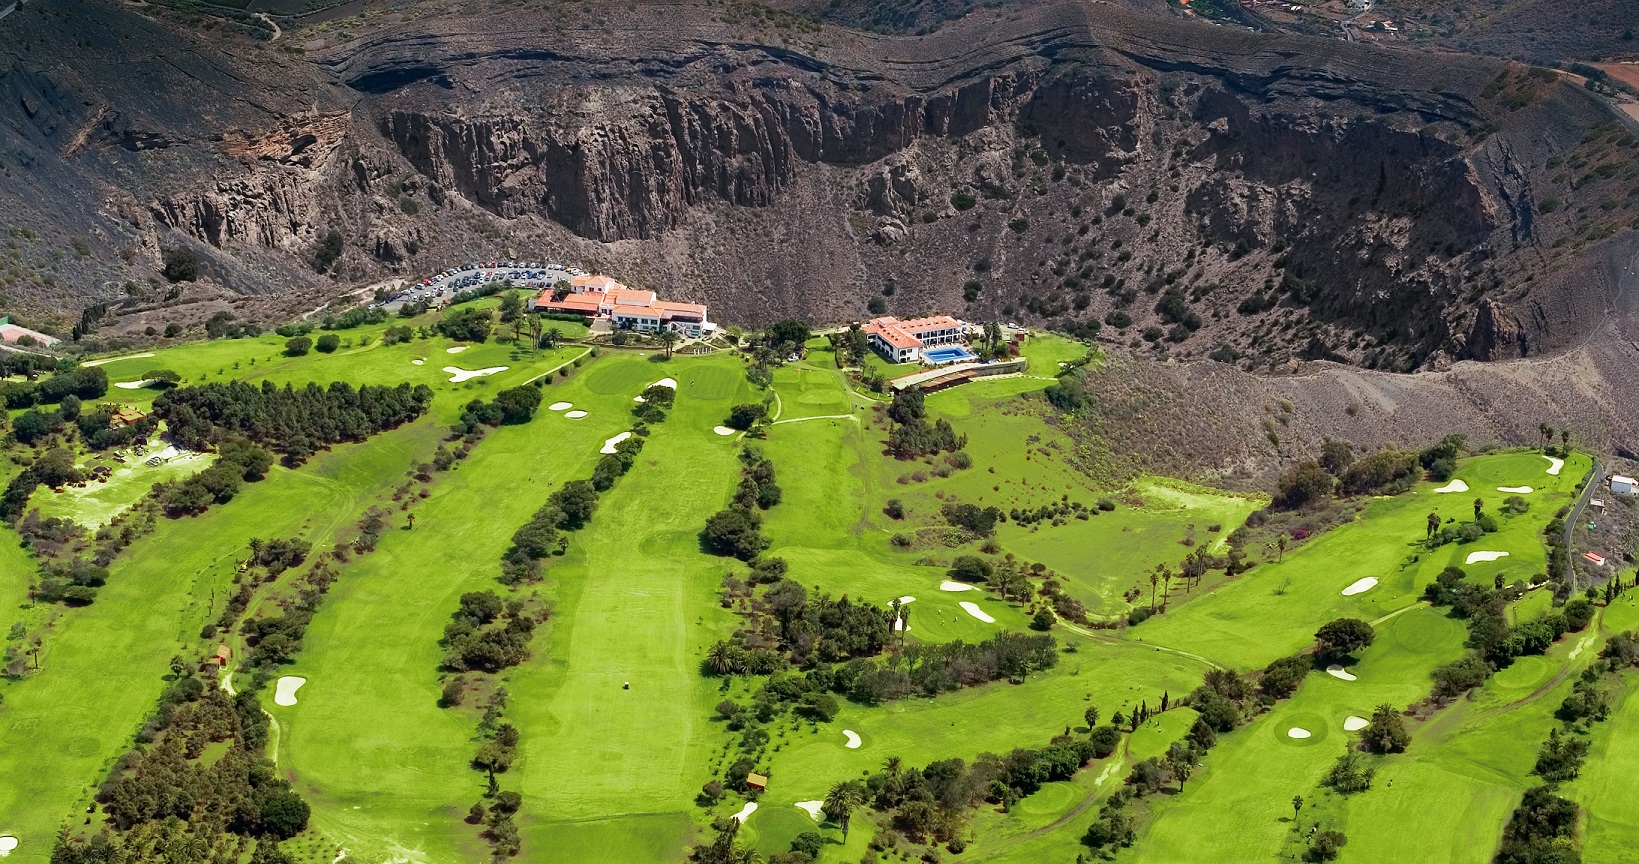 View of Las Palmas (Bandama) on the island of Gran Canaria